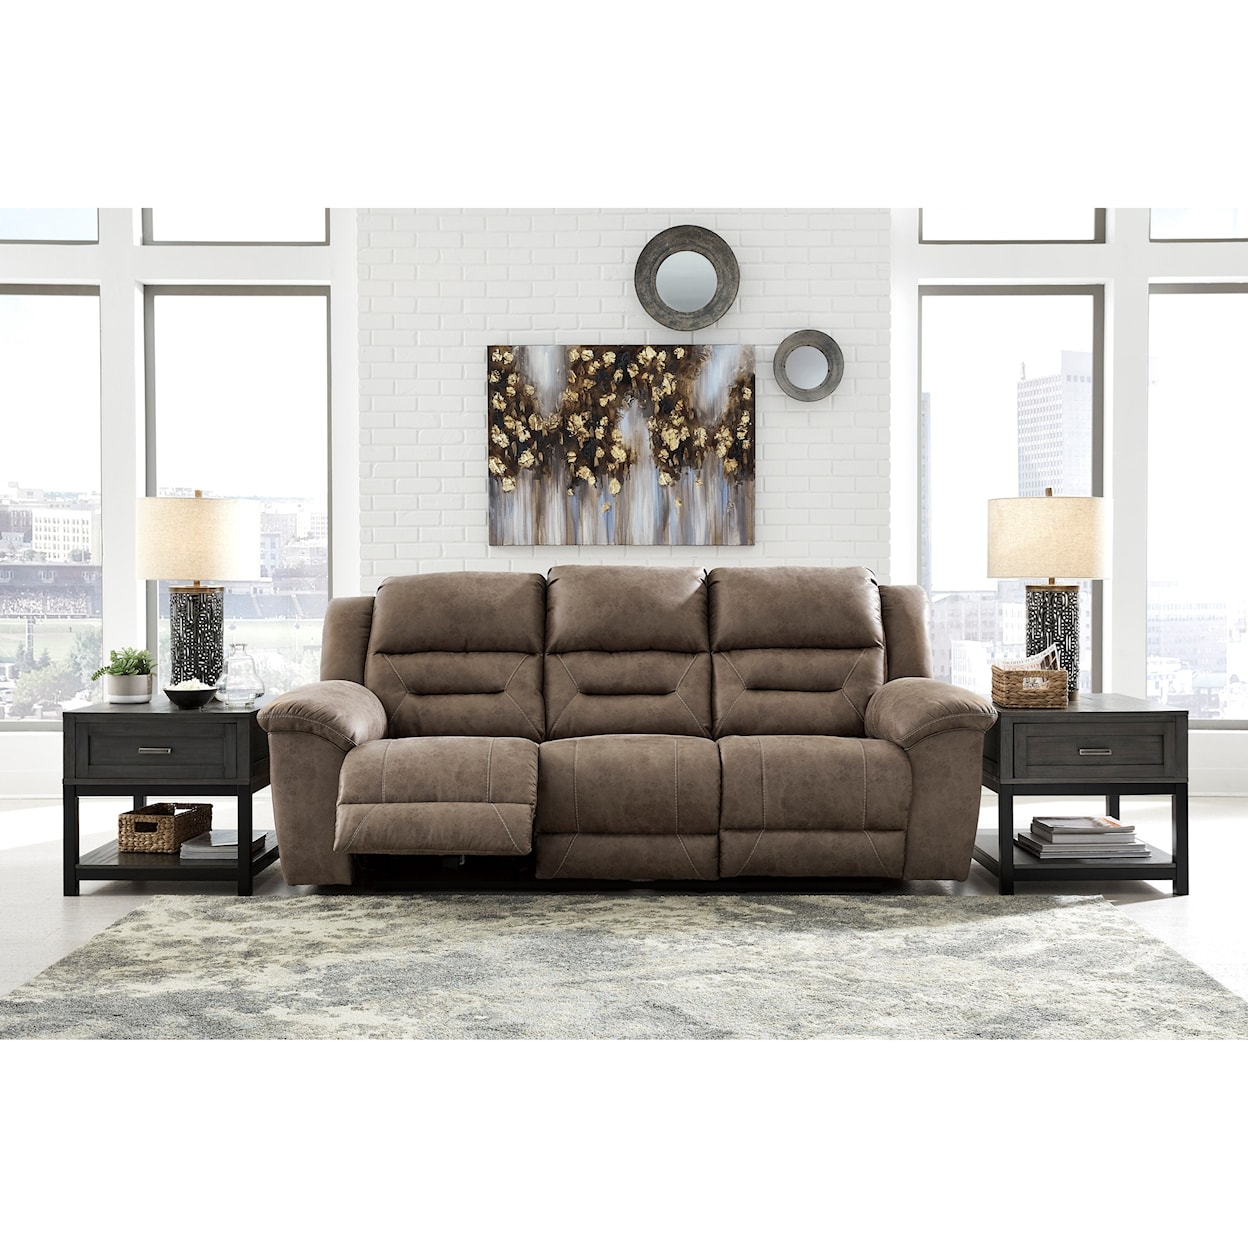 Ashley Furniture Signature Design Stoneland Reclining Sofa